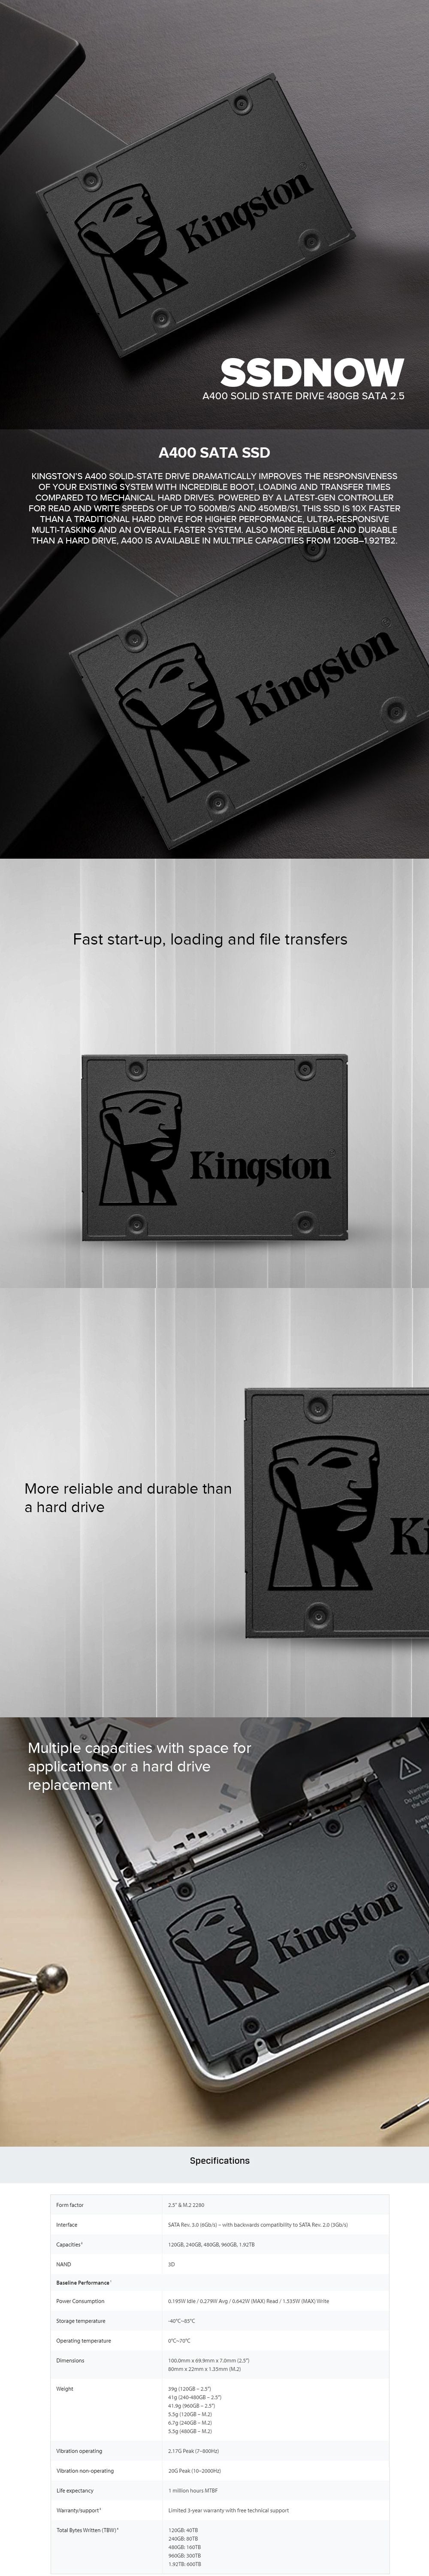 Kingston A400 SSD 480GB SATA 3 2.5 Inch Solid State Drive Dark Gray